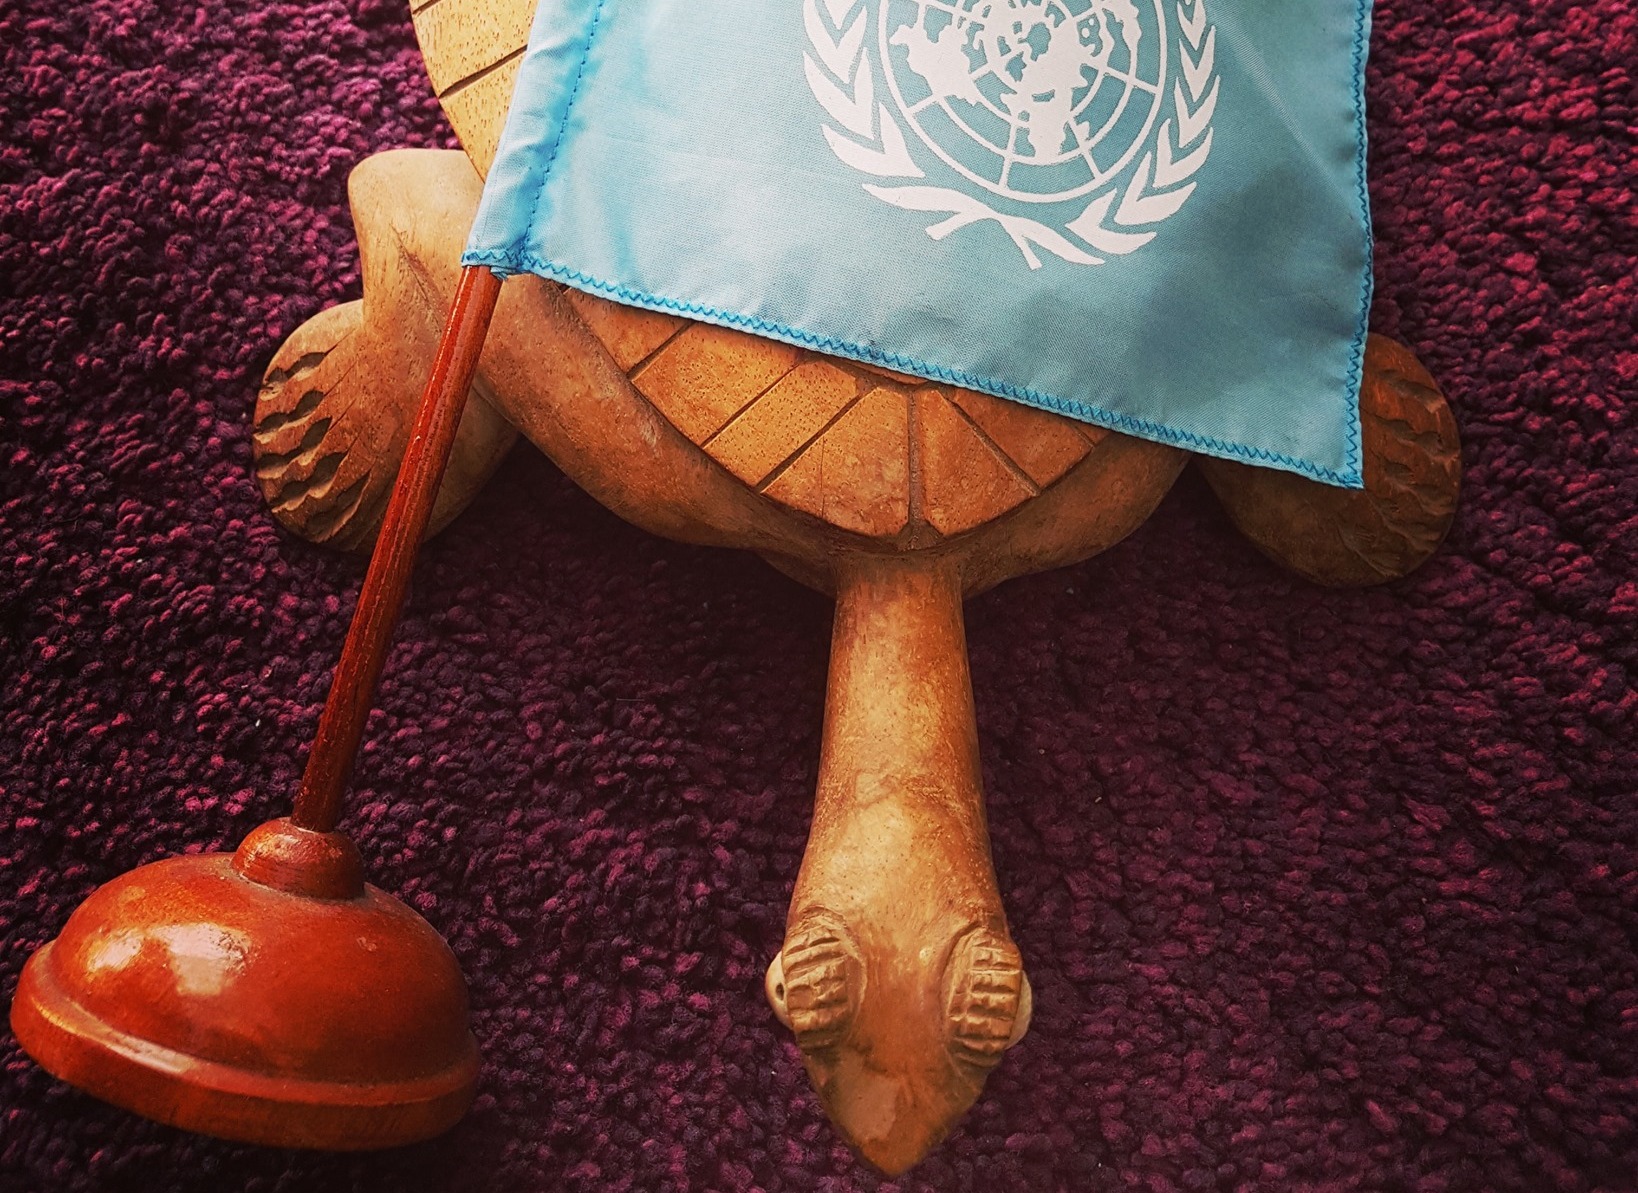 UN flag over wooden turtle